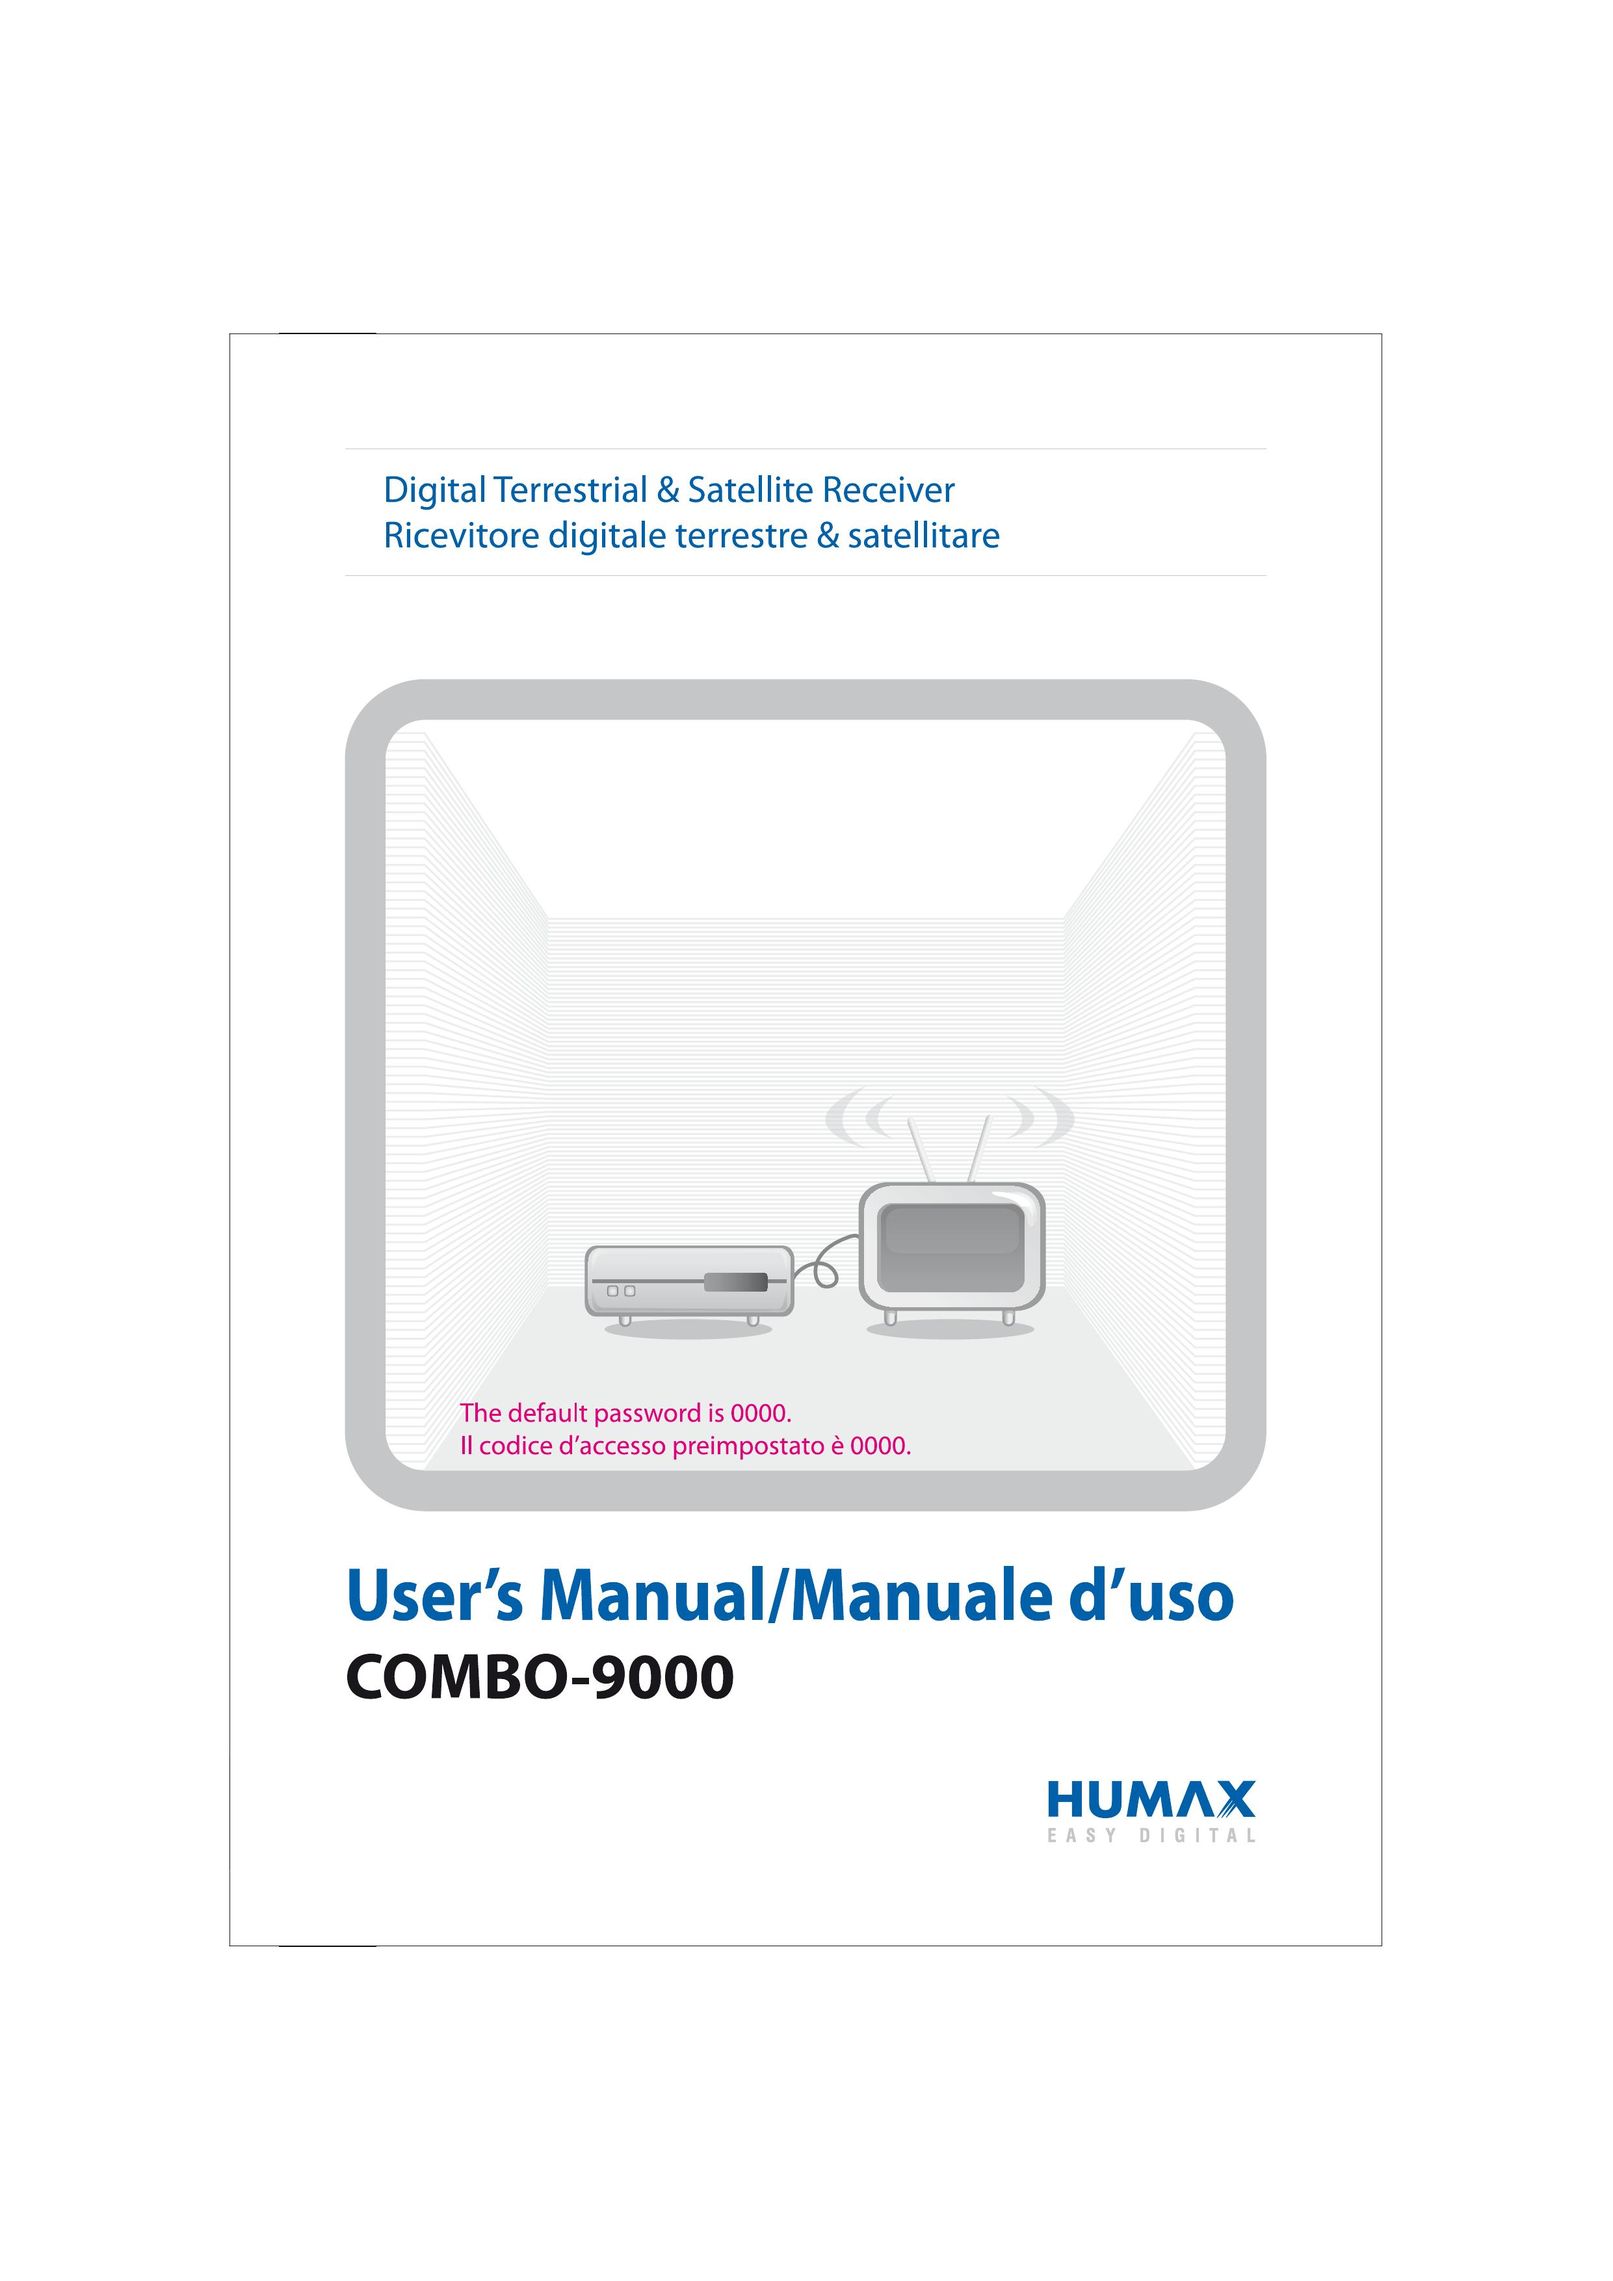 Humax COMBO-9000 TV Receiver User Manual